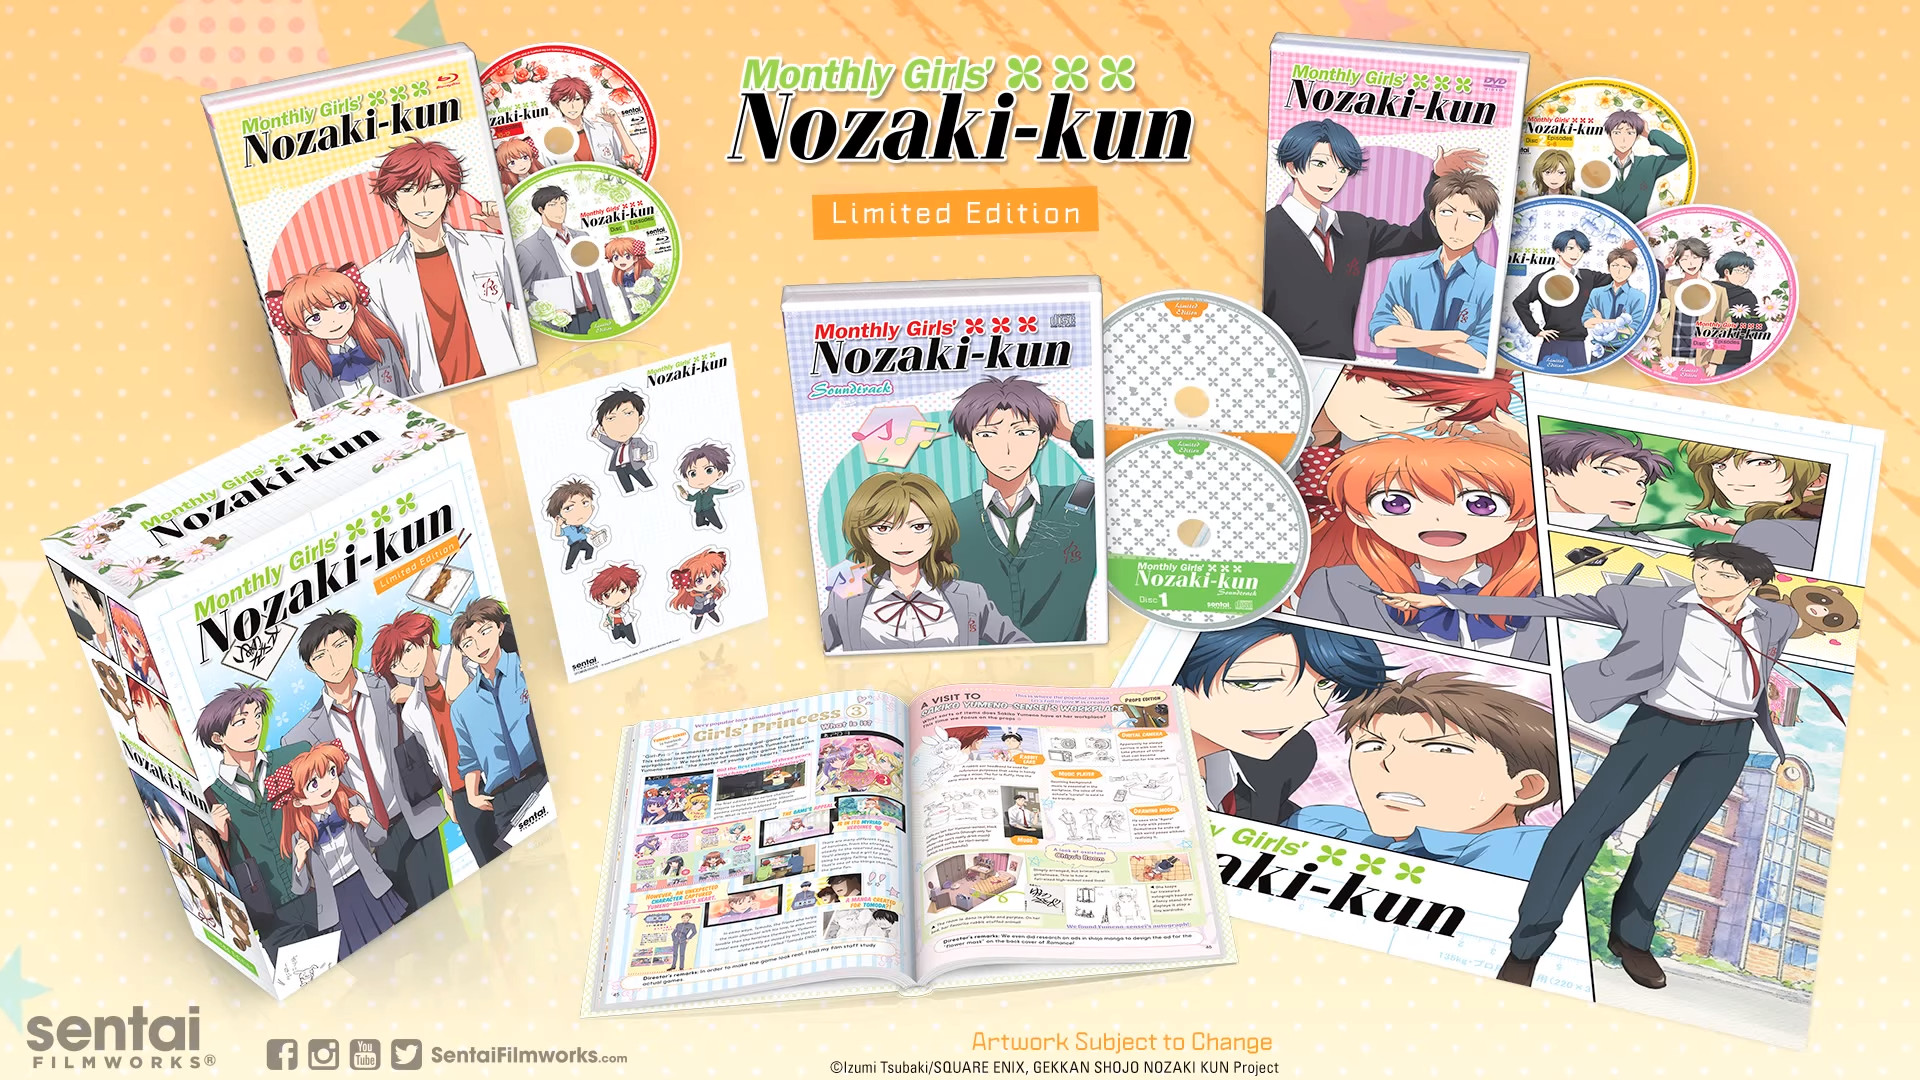 Monthly Girls' Nozaki-kun Premium Box Set Contents Revealed!